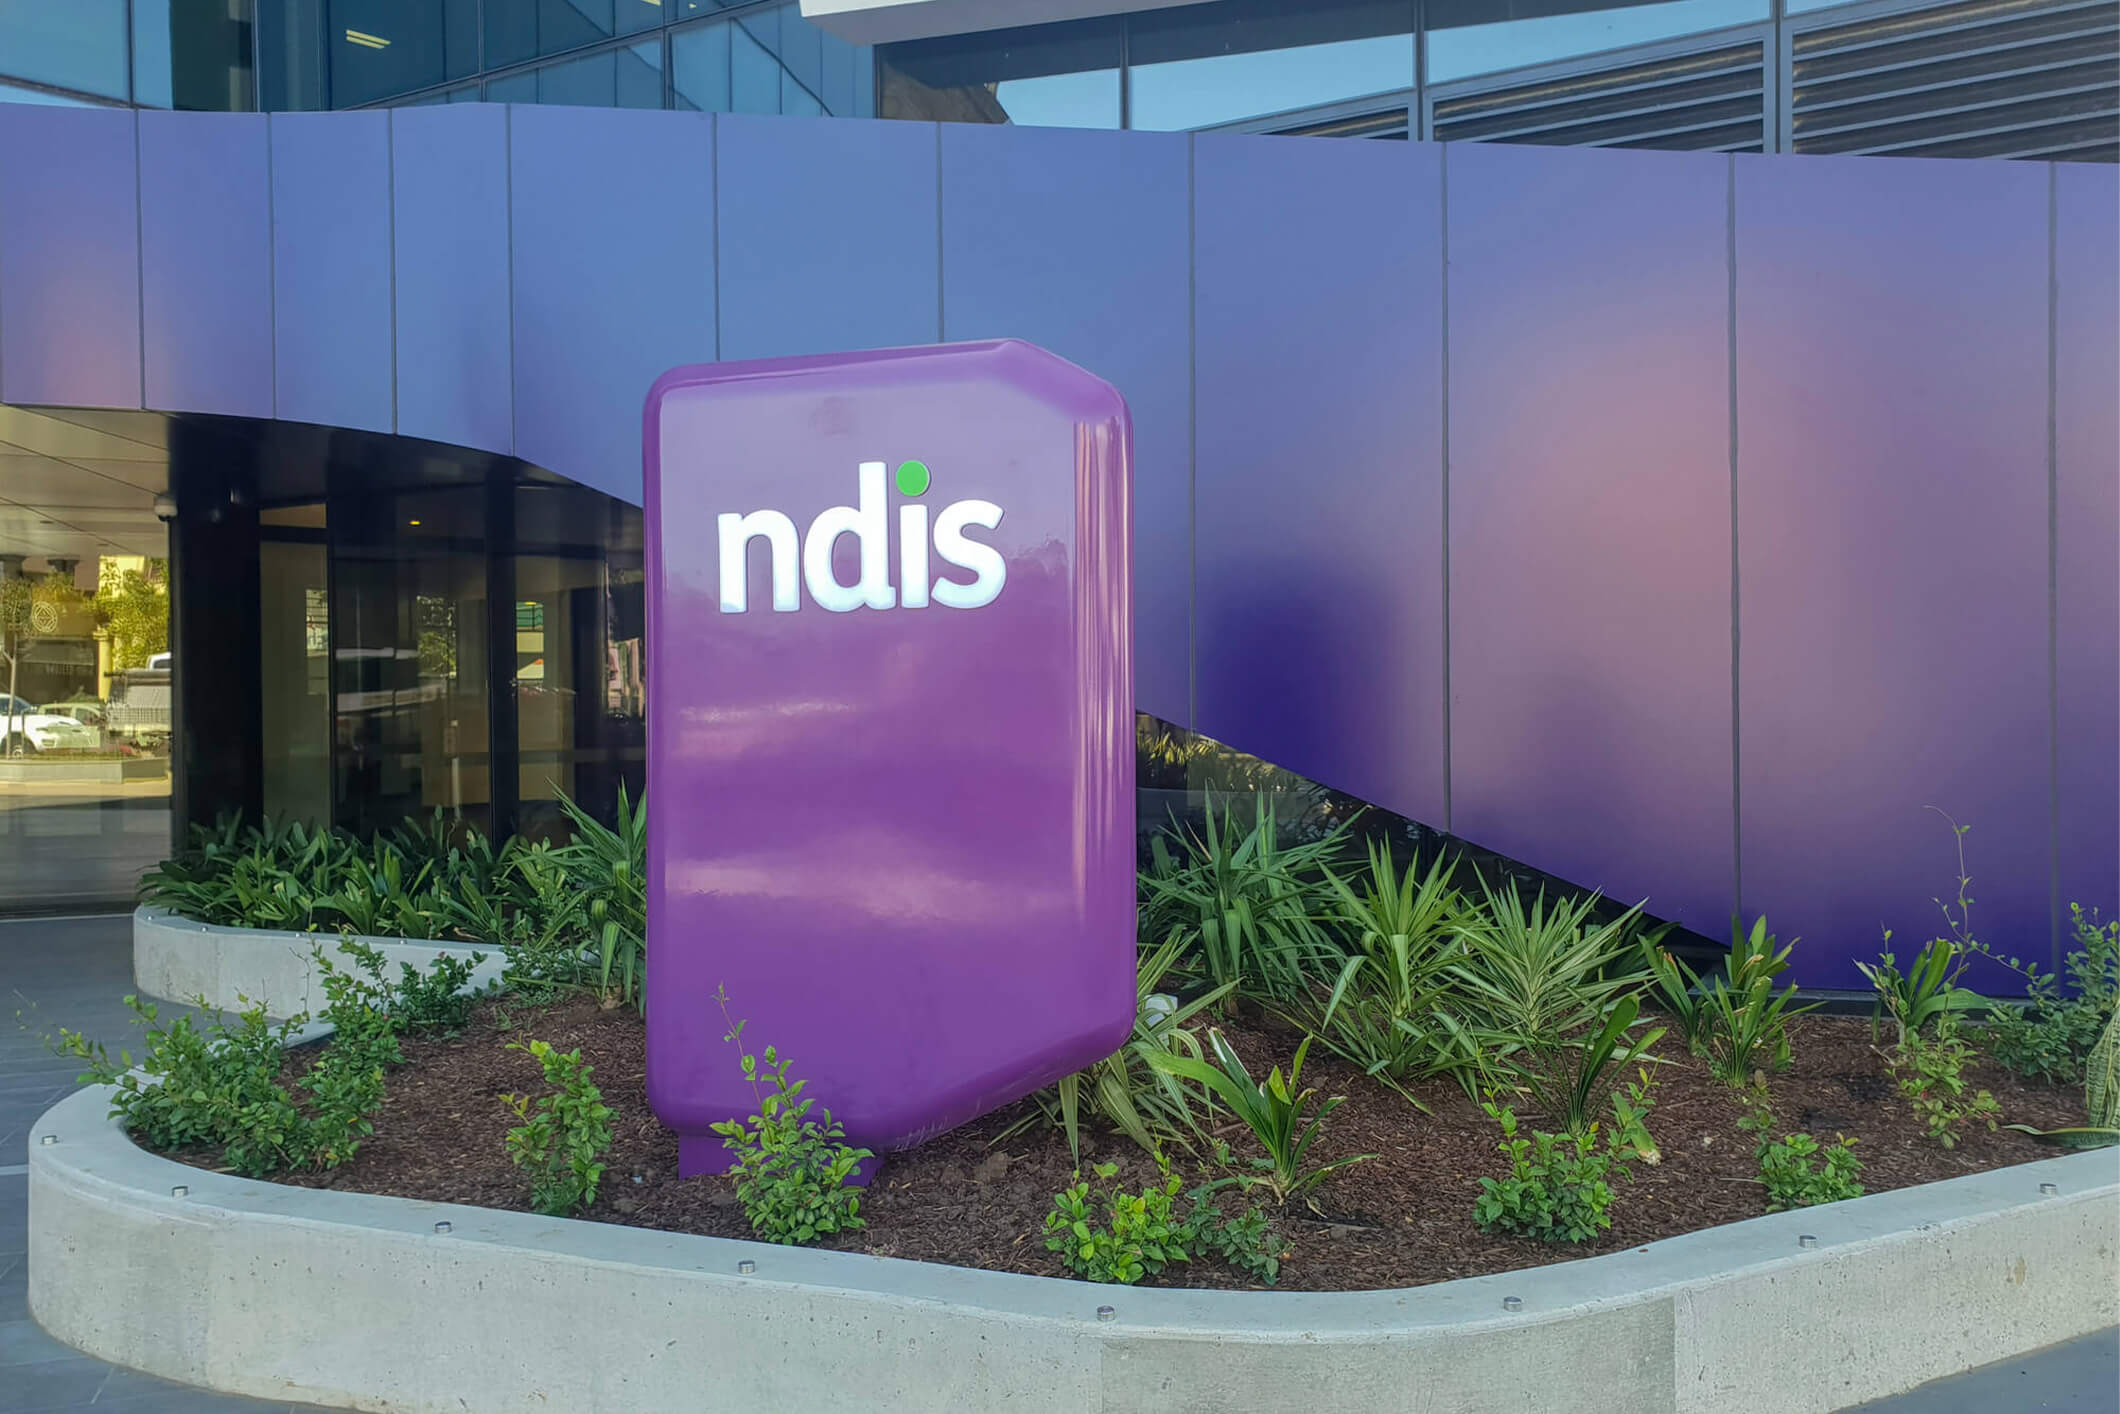 NDIS building in Australia